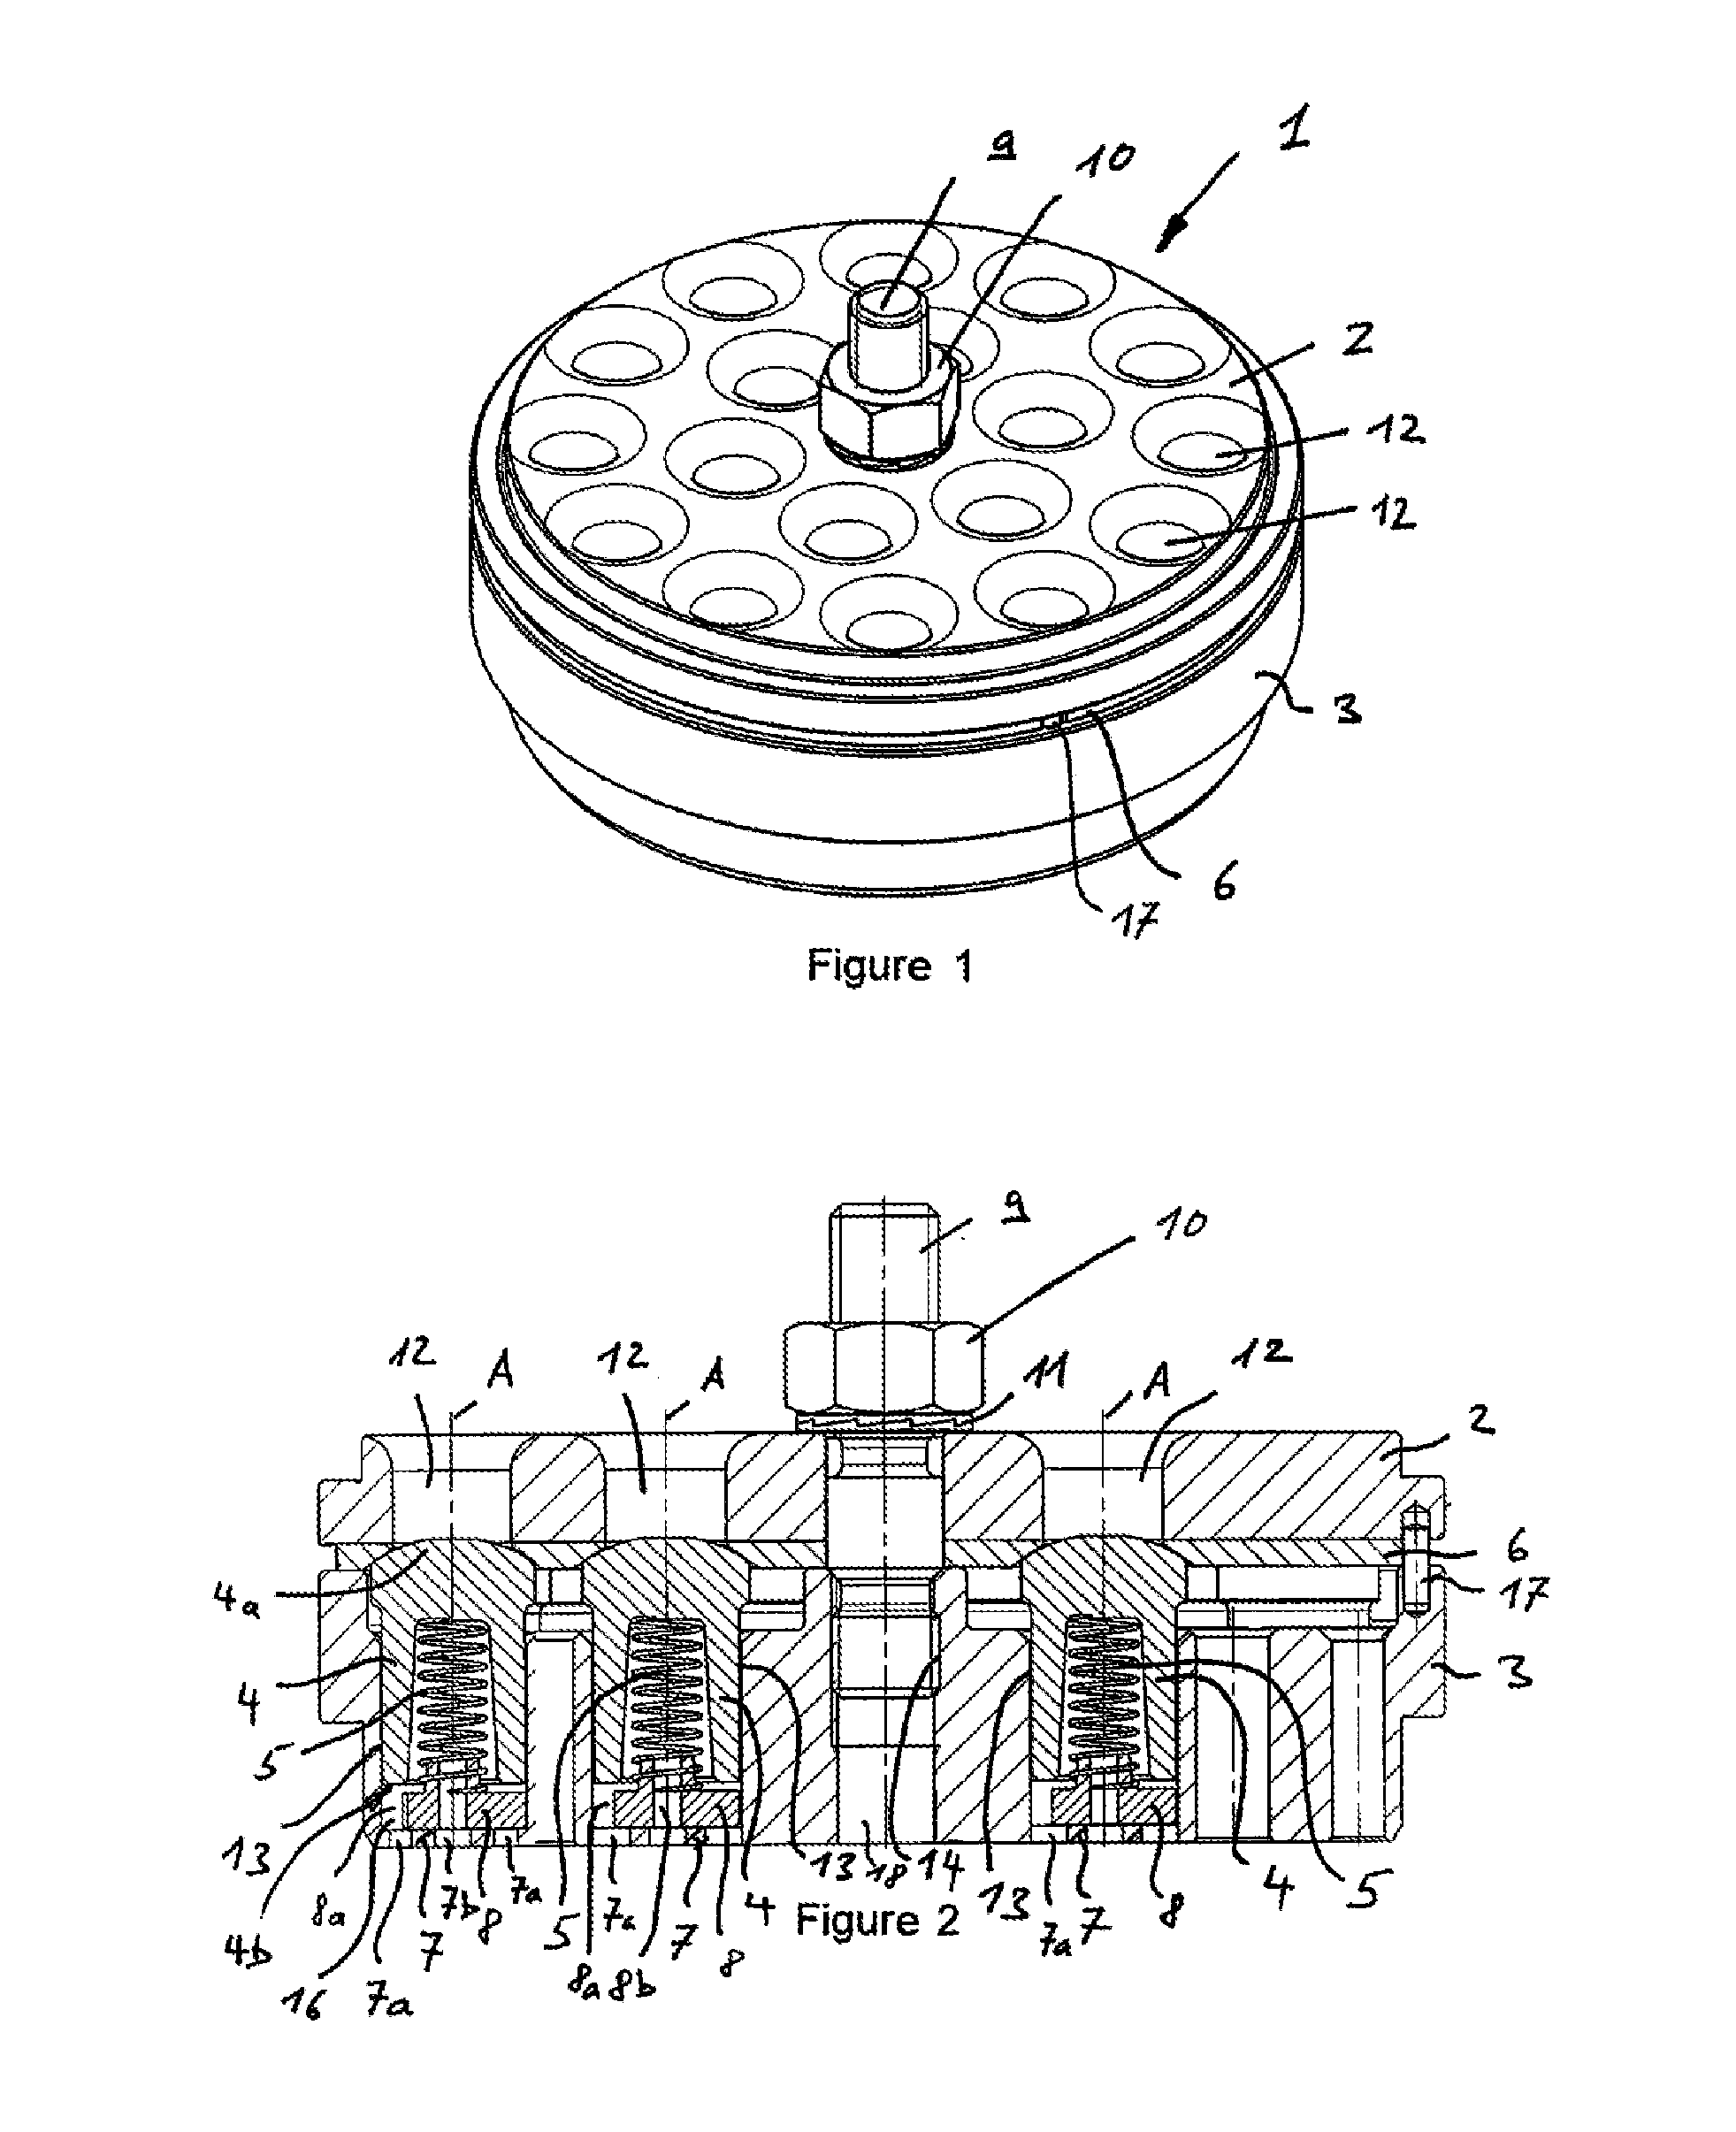 Poppet valve for a compressor